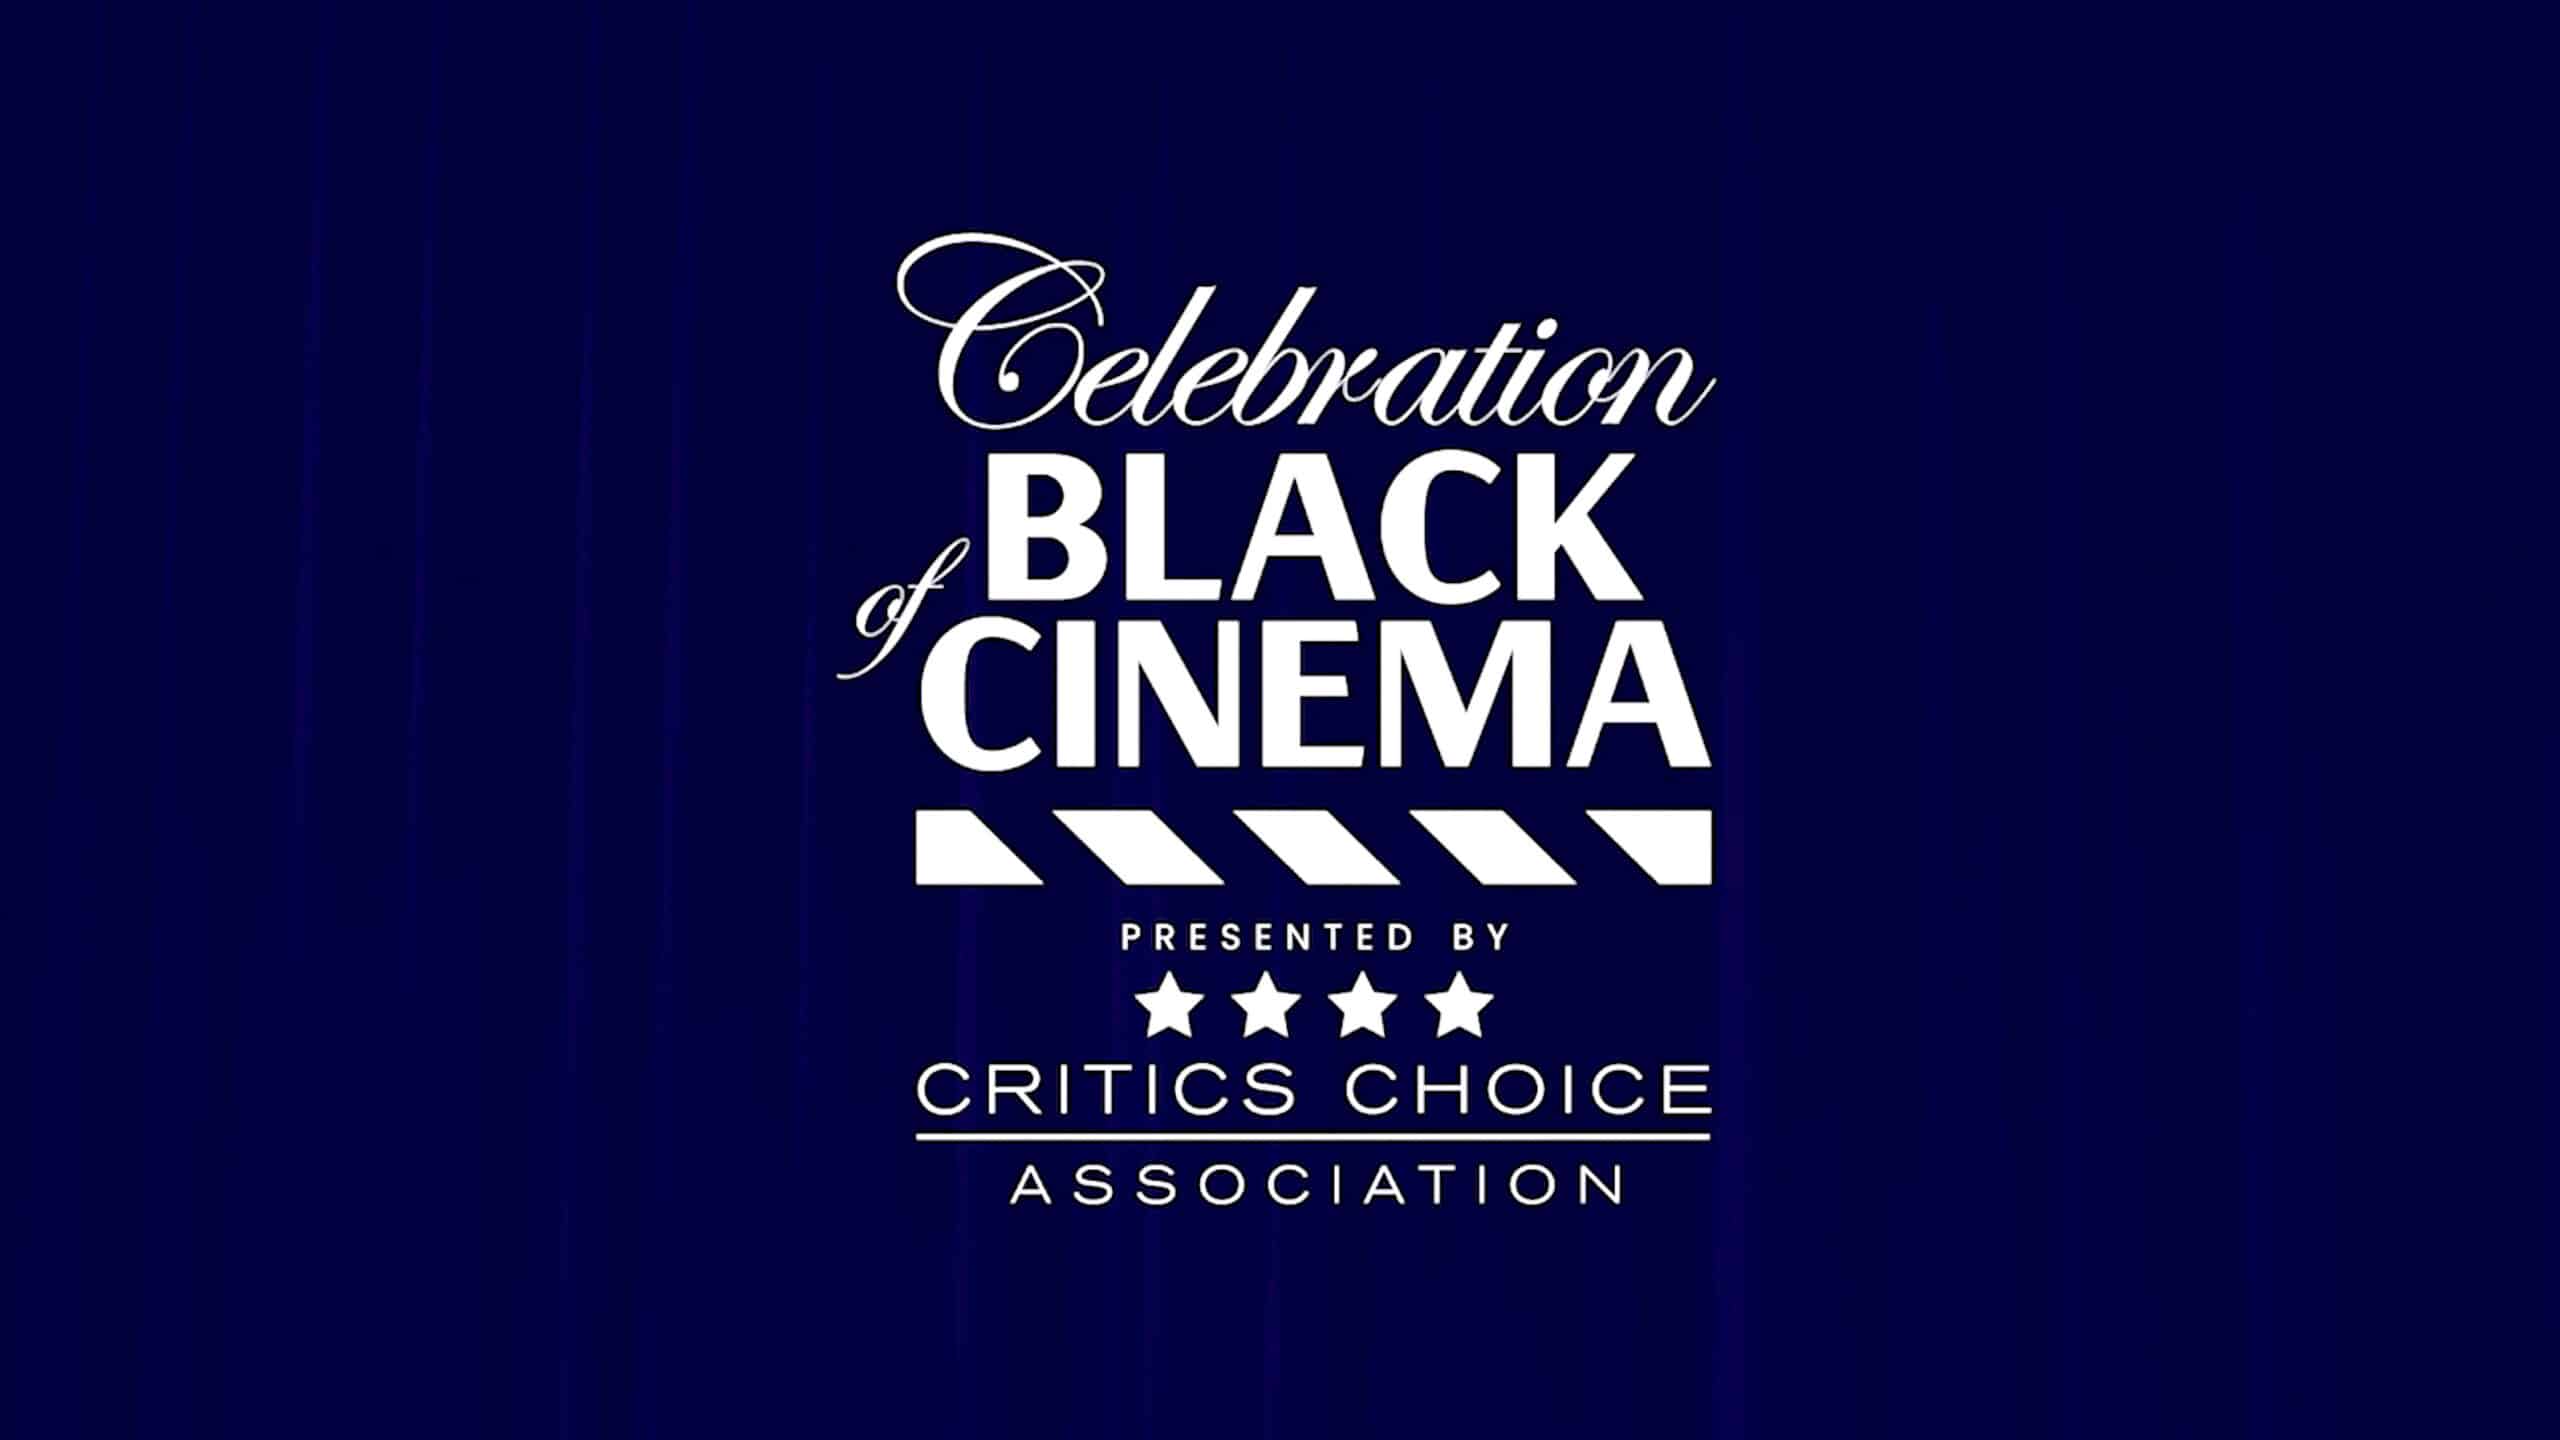 Celebration of Black Cinema: Late Breaking News